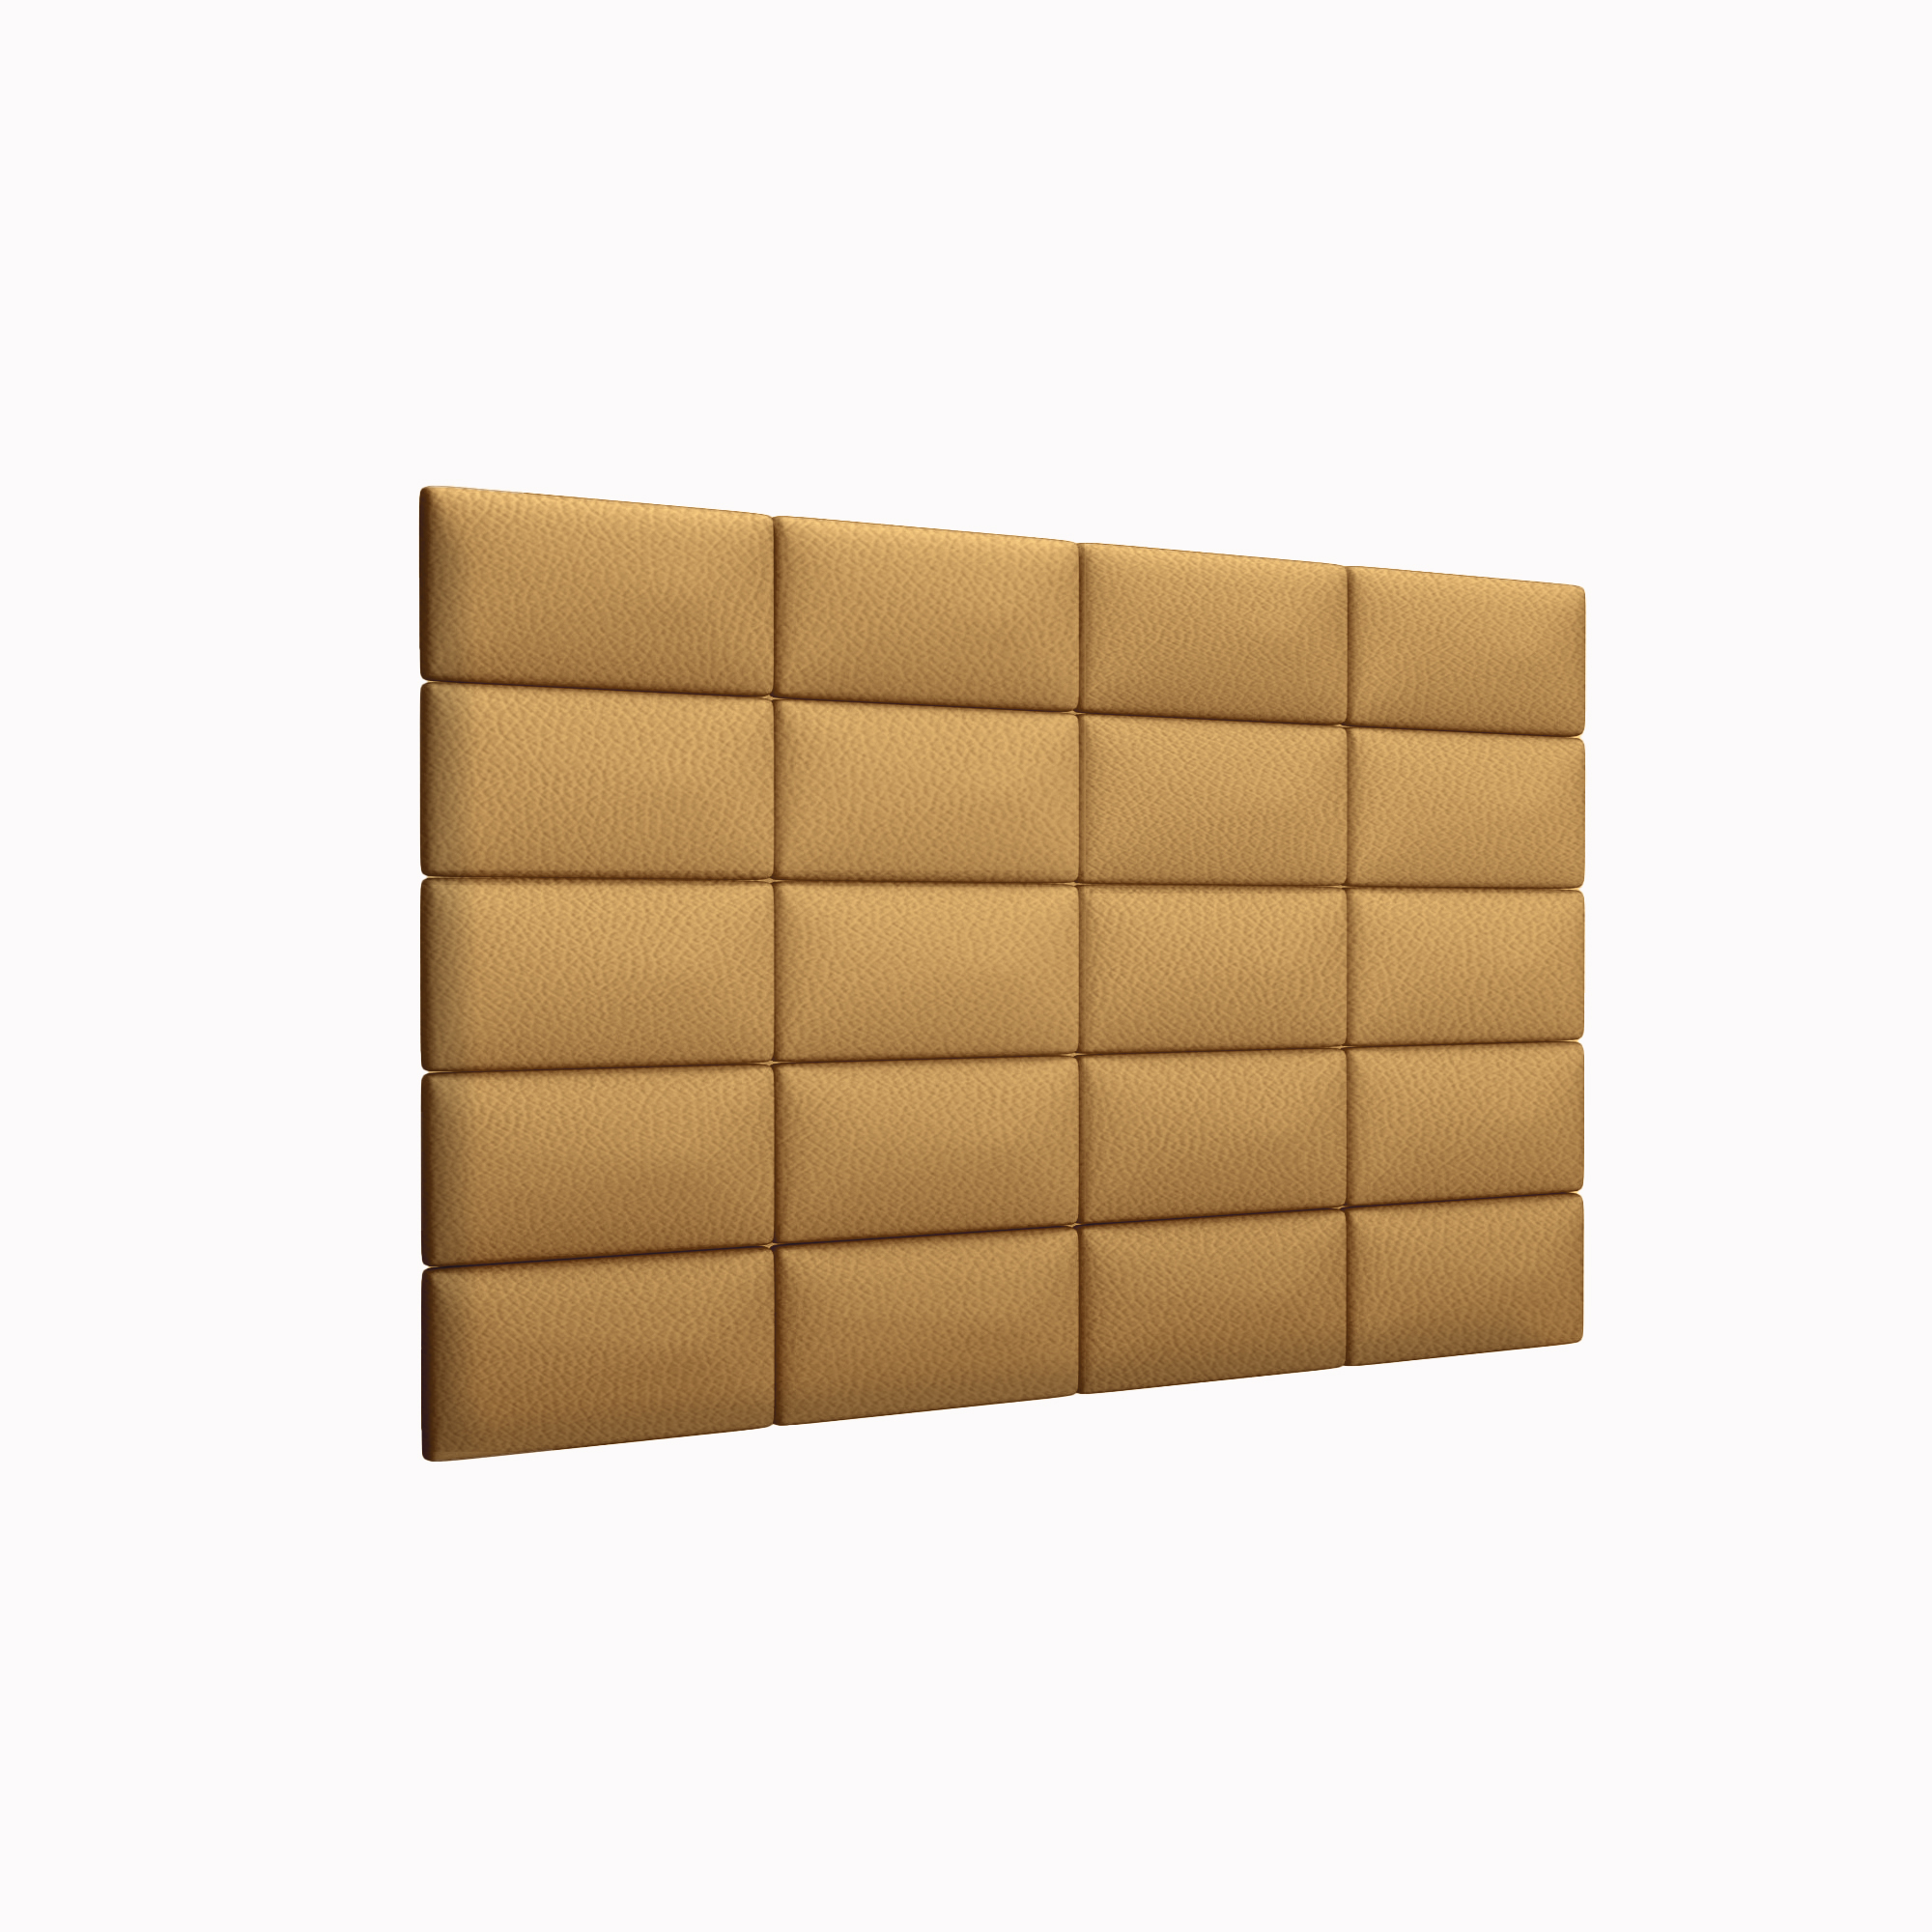 Мягкие стеновые панели Eco Leather Gold 15х30 см 4 шт.